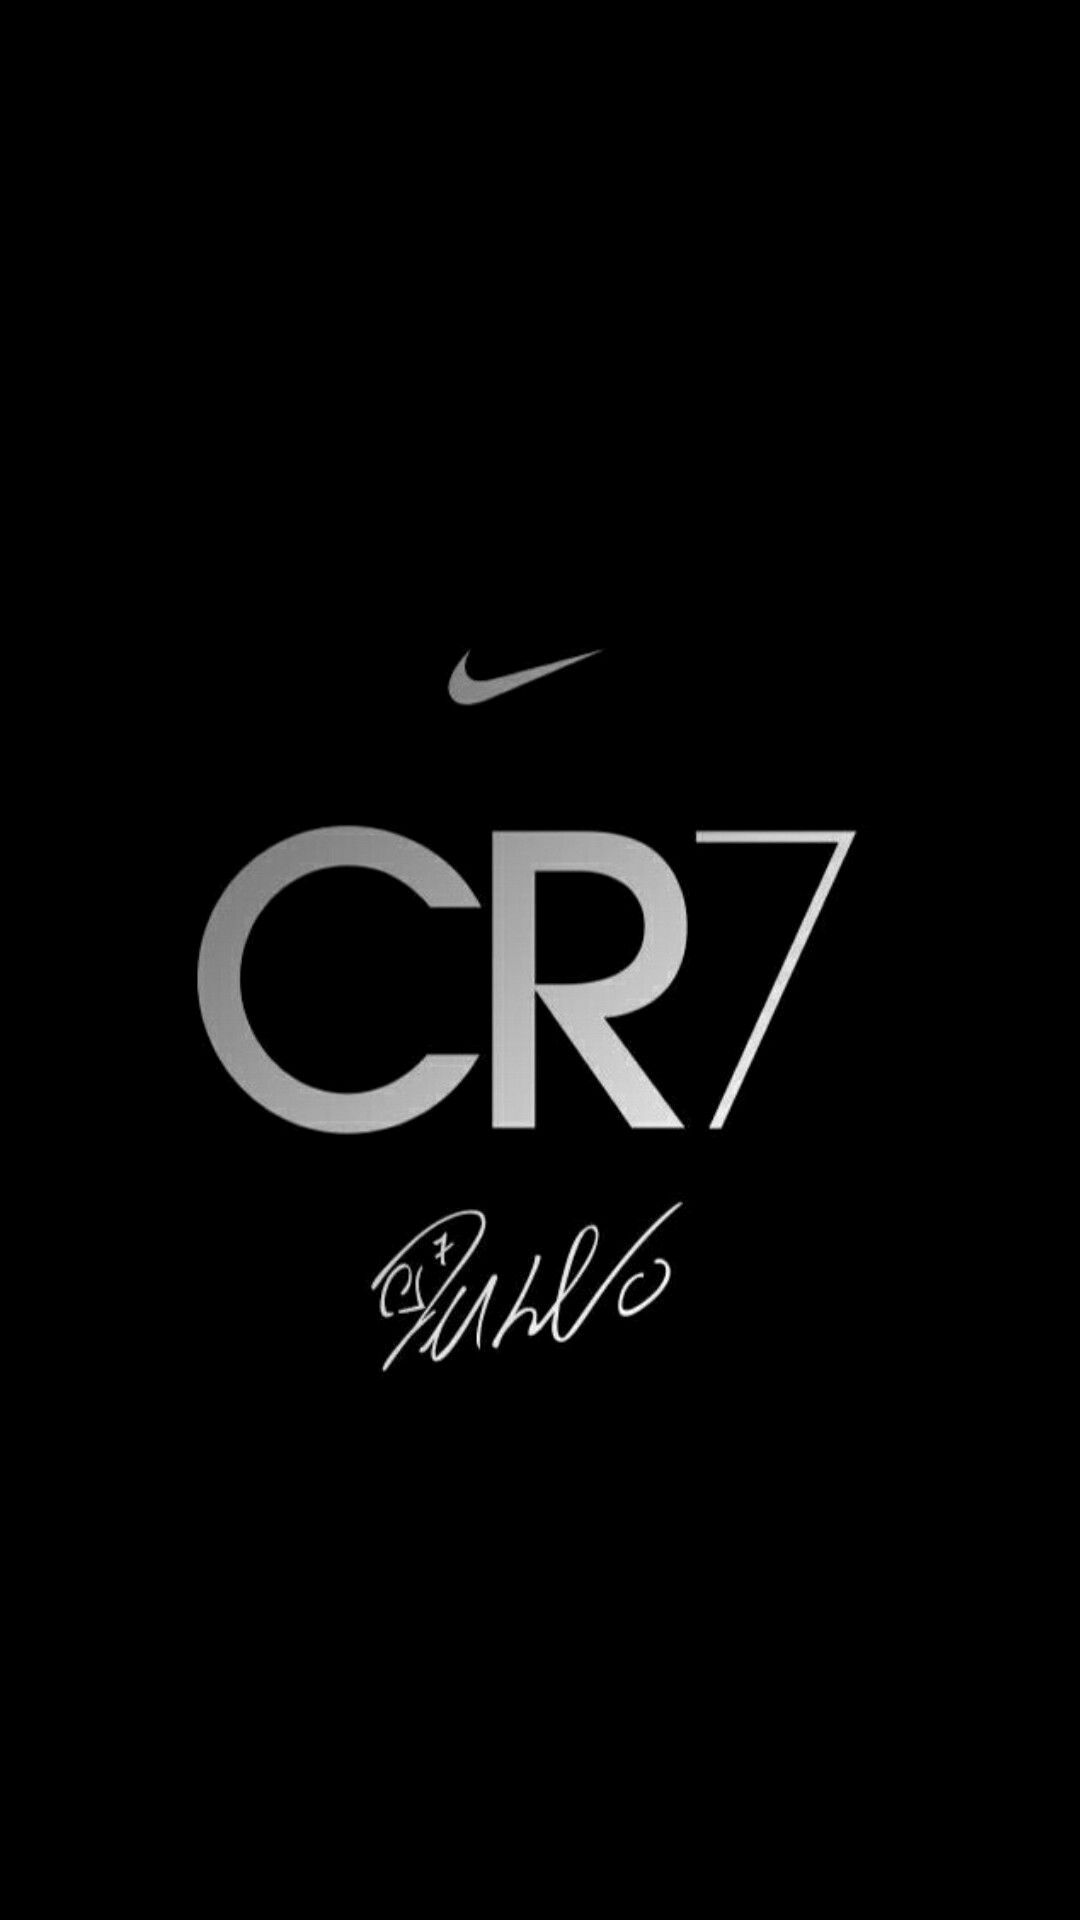 Nike Cr7 Galaxy Wallpapers On Wallpaperdog